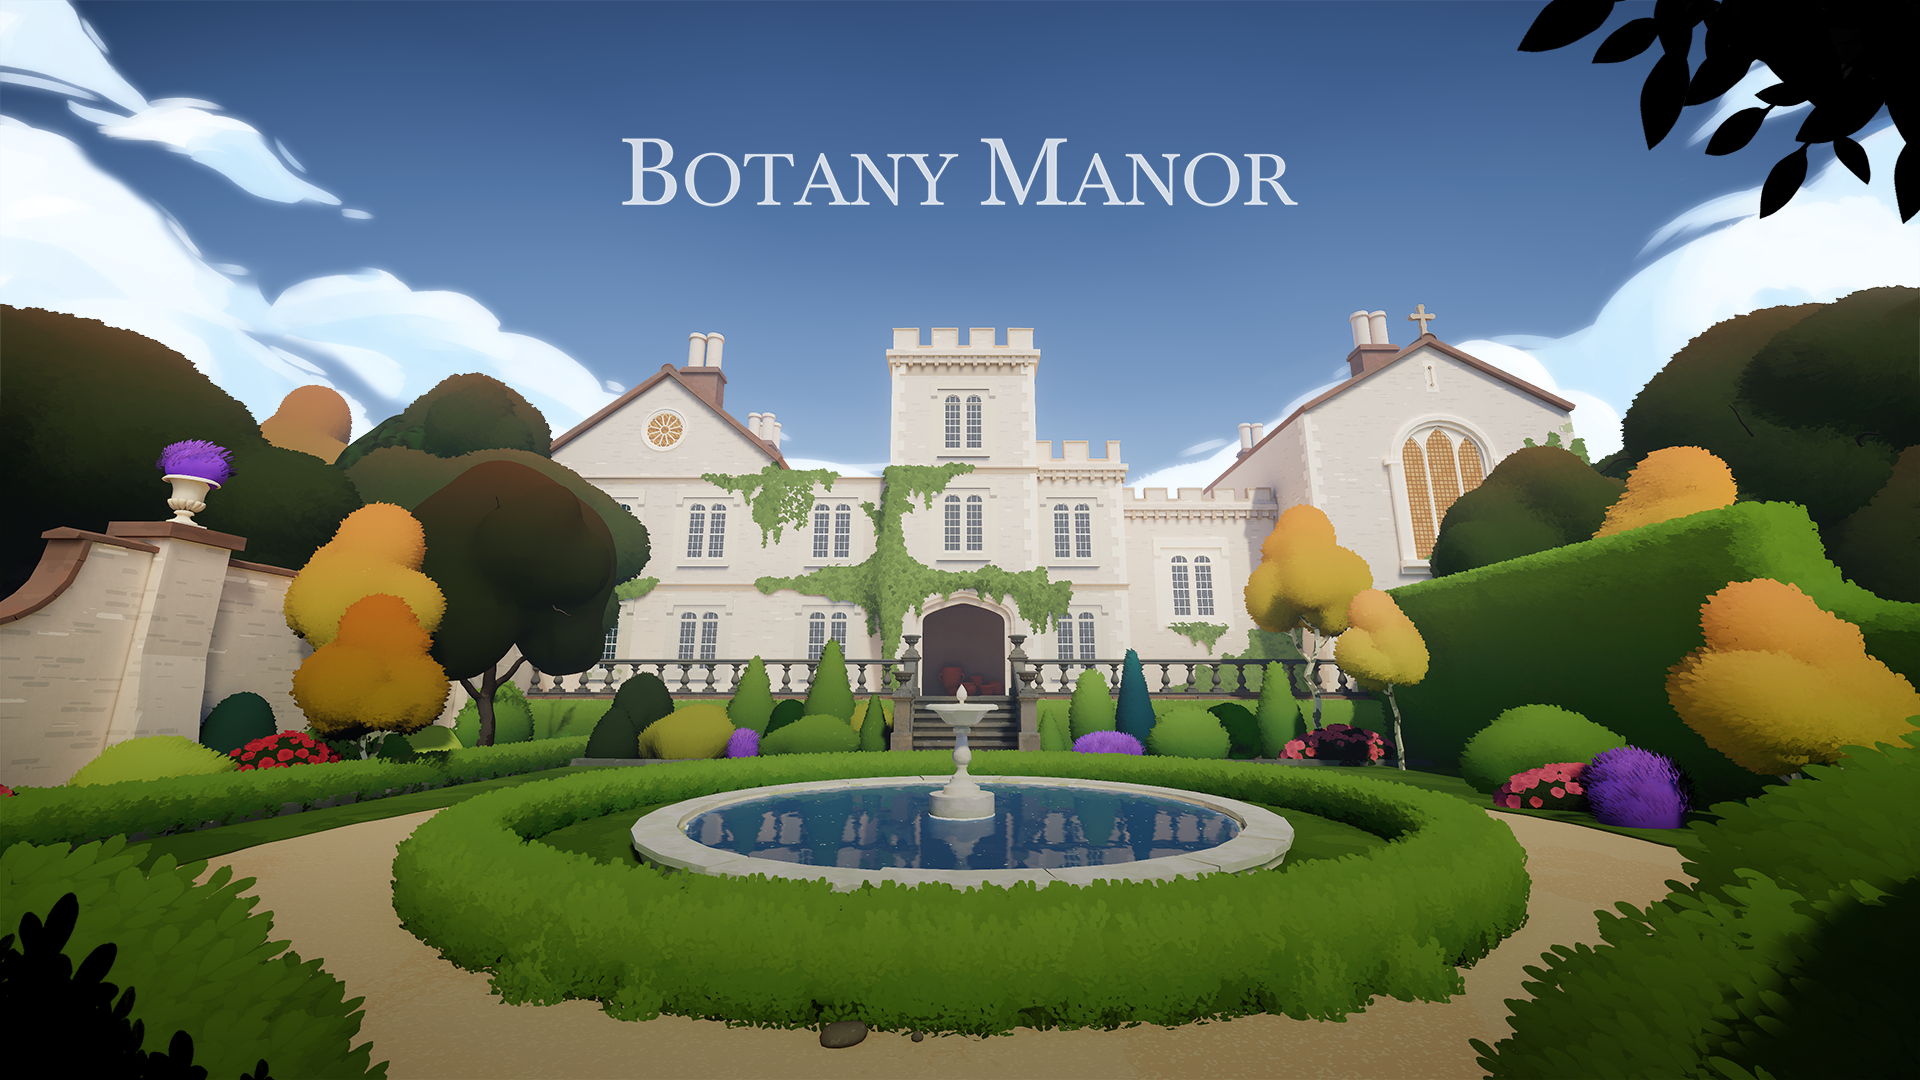 The key art for Botany Manor.